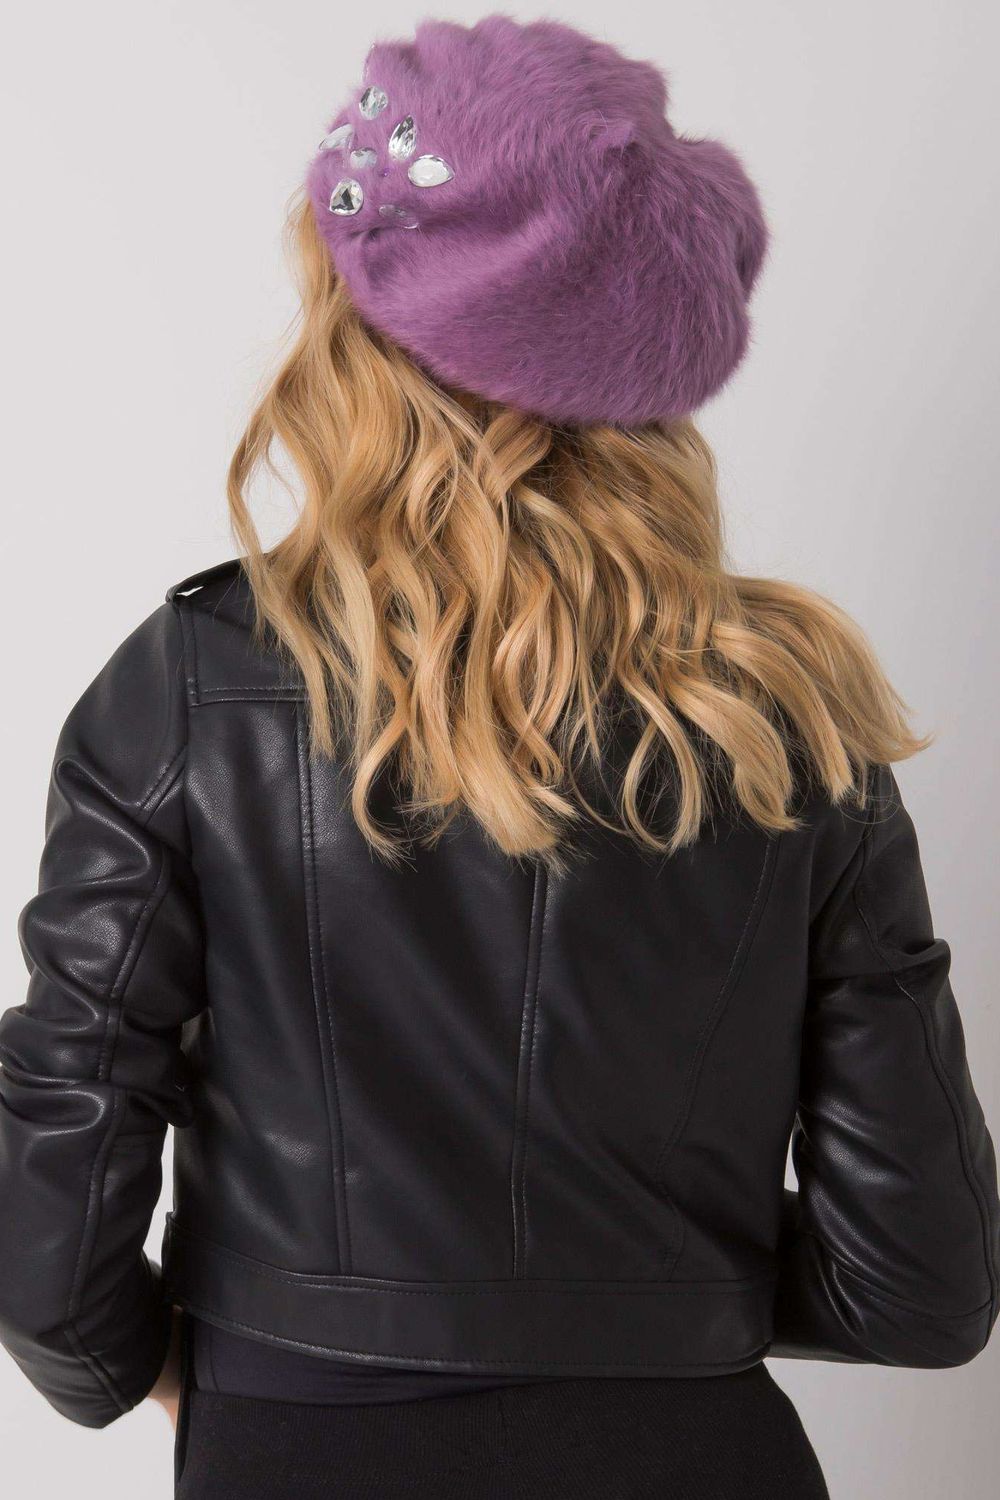 Beret model 161137 Elsy Style Caps & Hats for Women